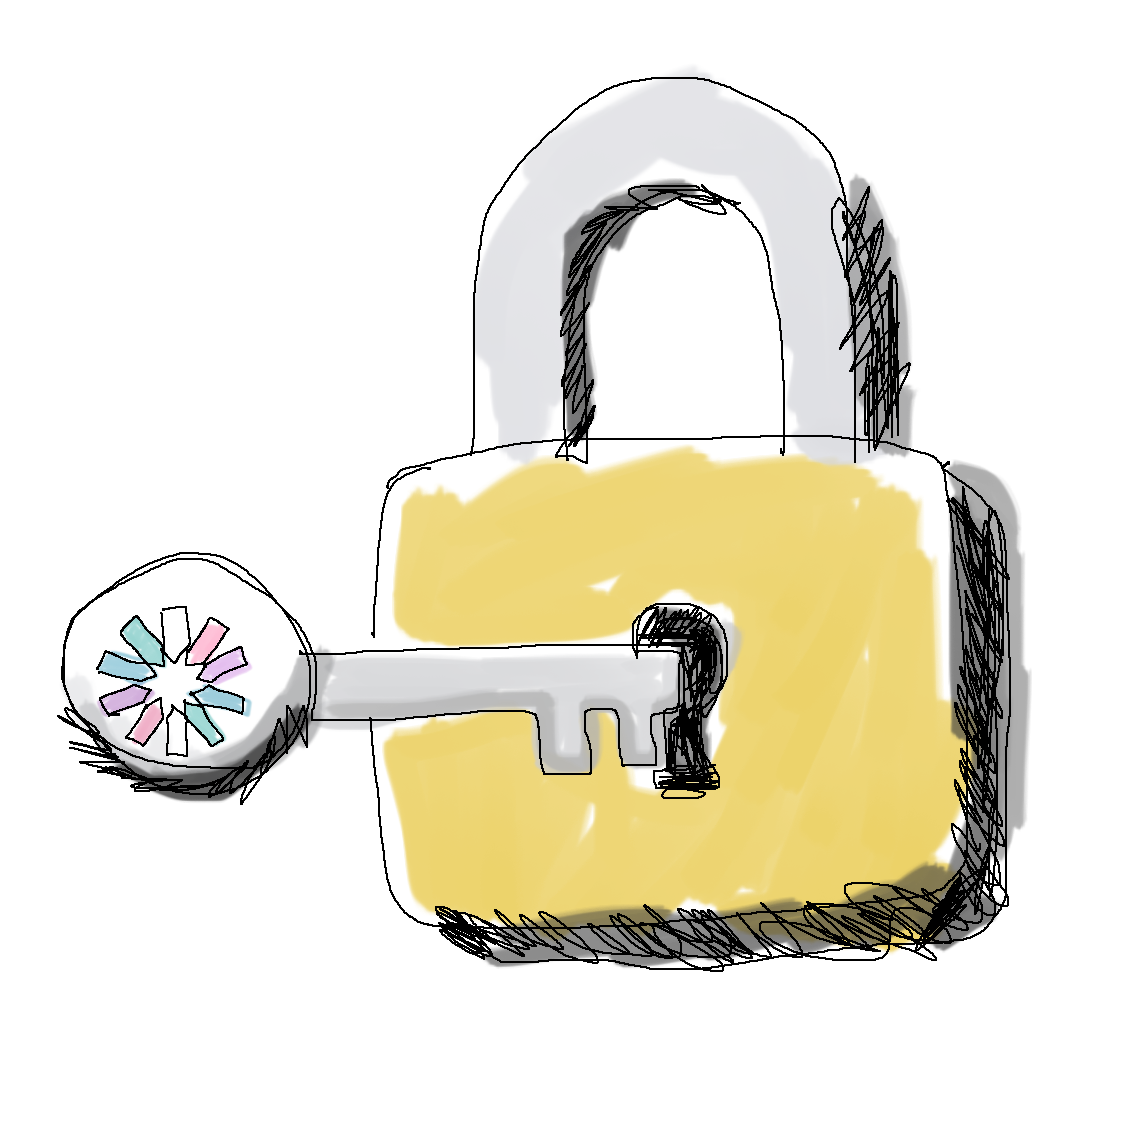 jwt lock and key image